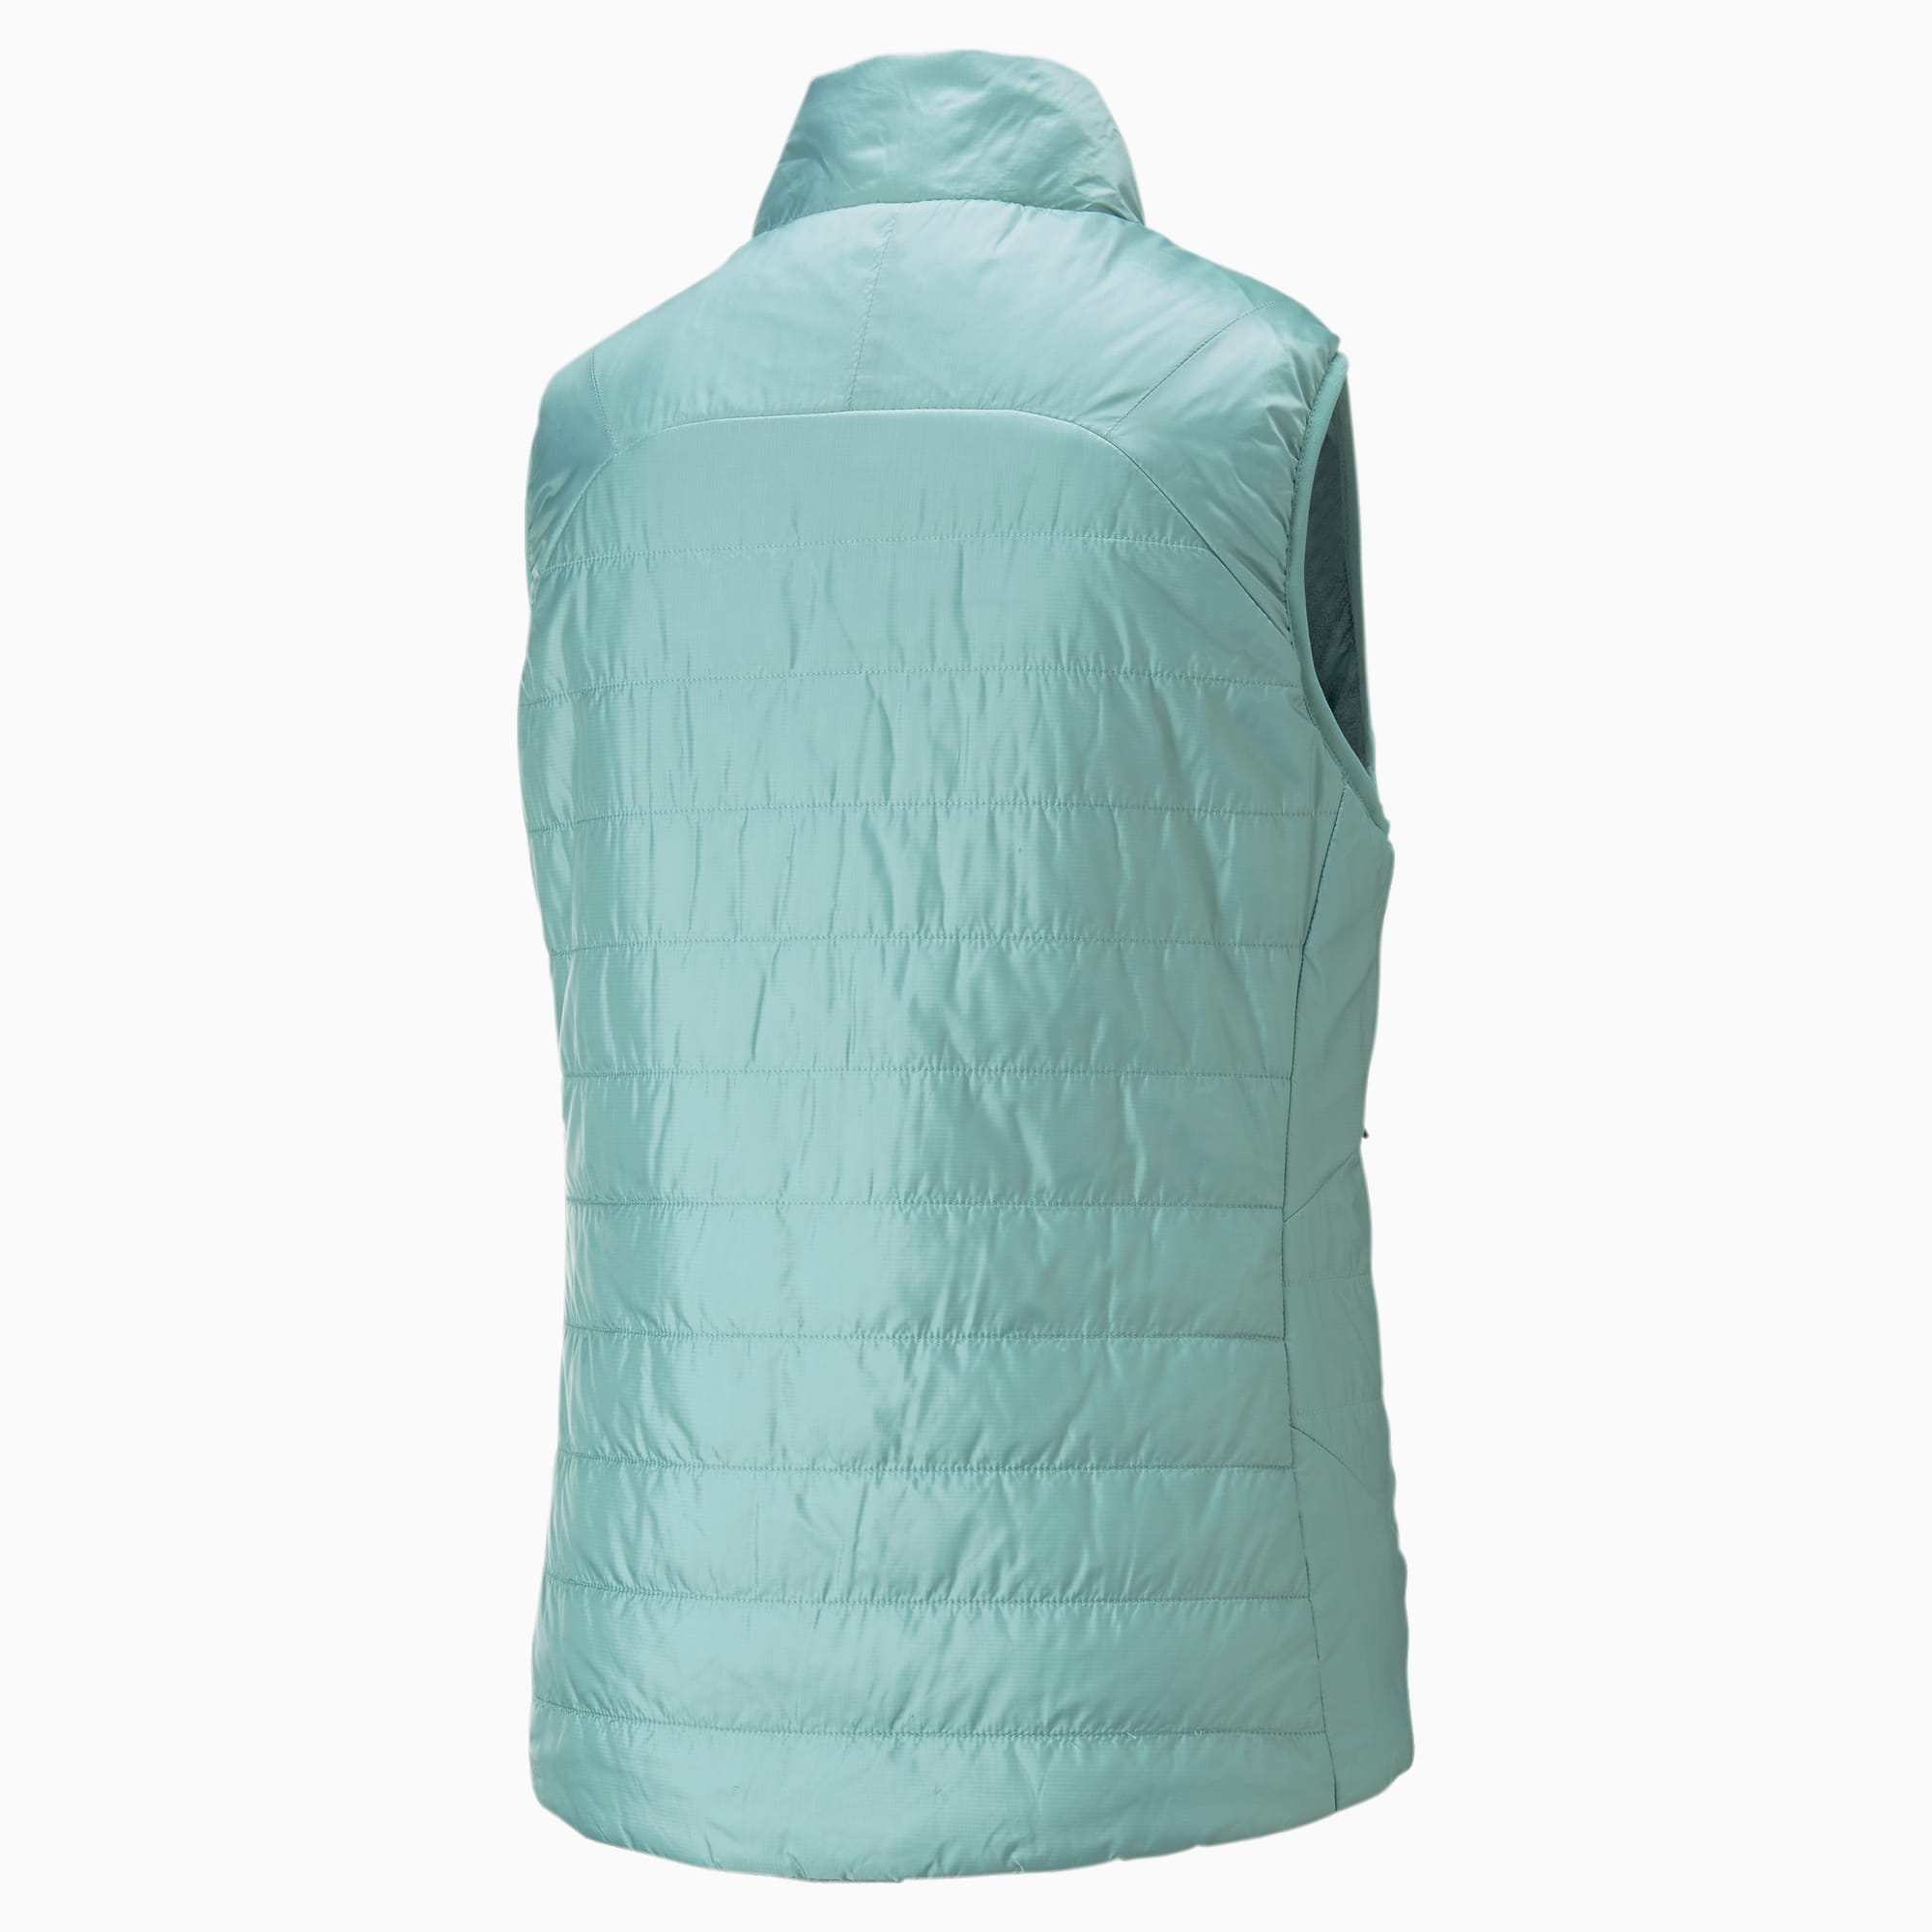 PUMA Seasons Reversible Primaloft Hiking Vest Women Women's Jacket, Adriatic, Size M, Clothing